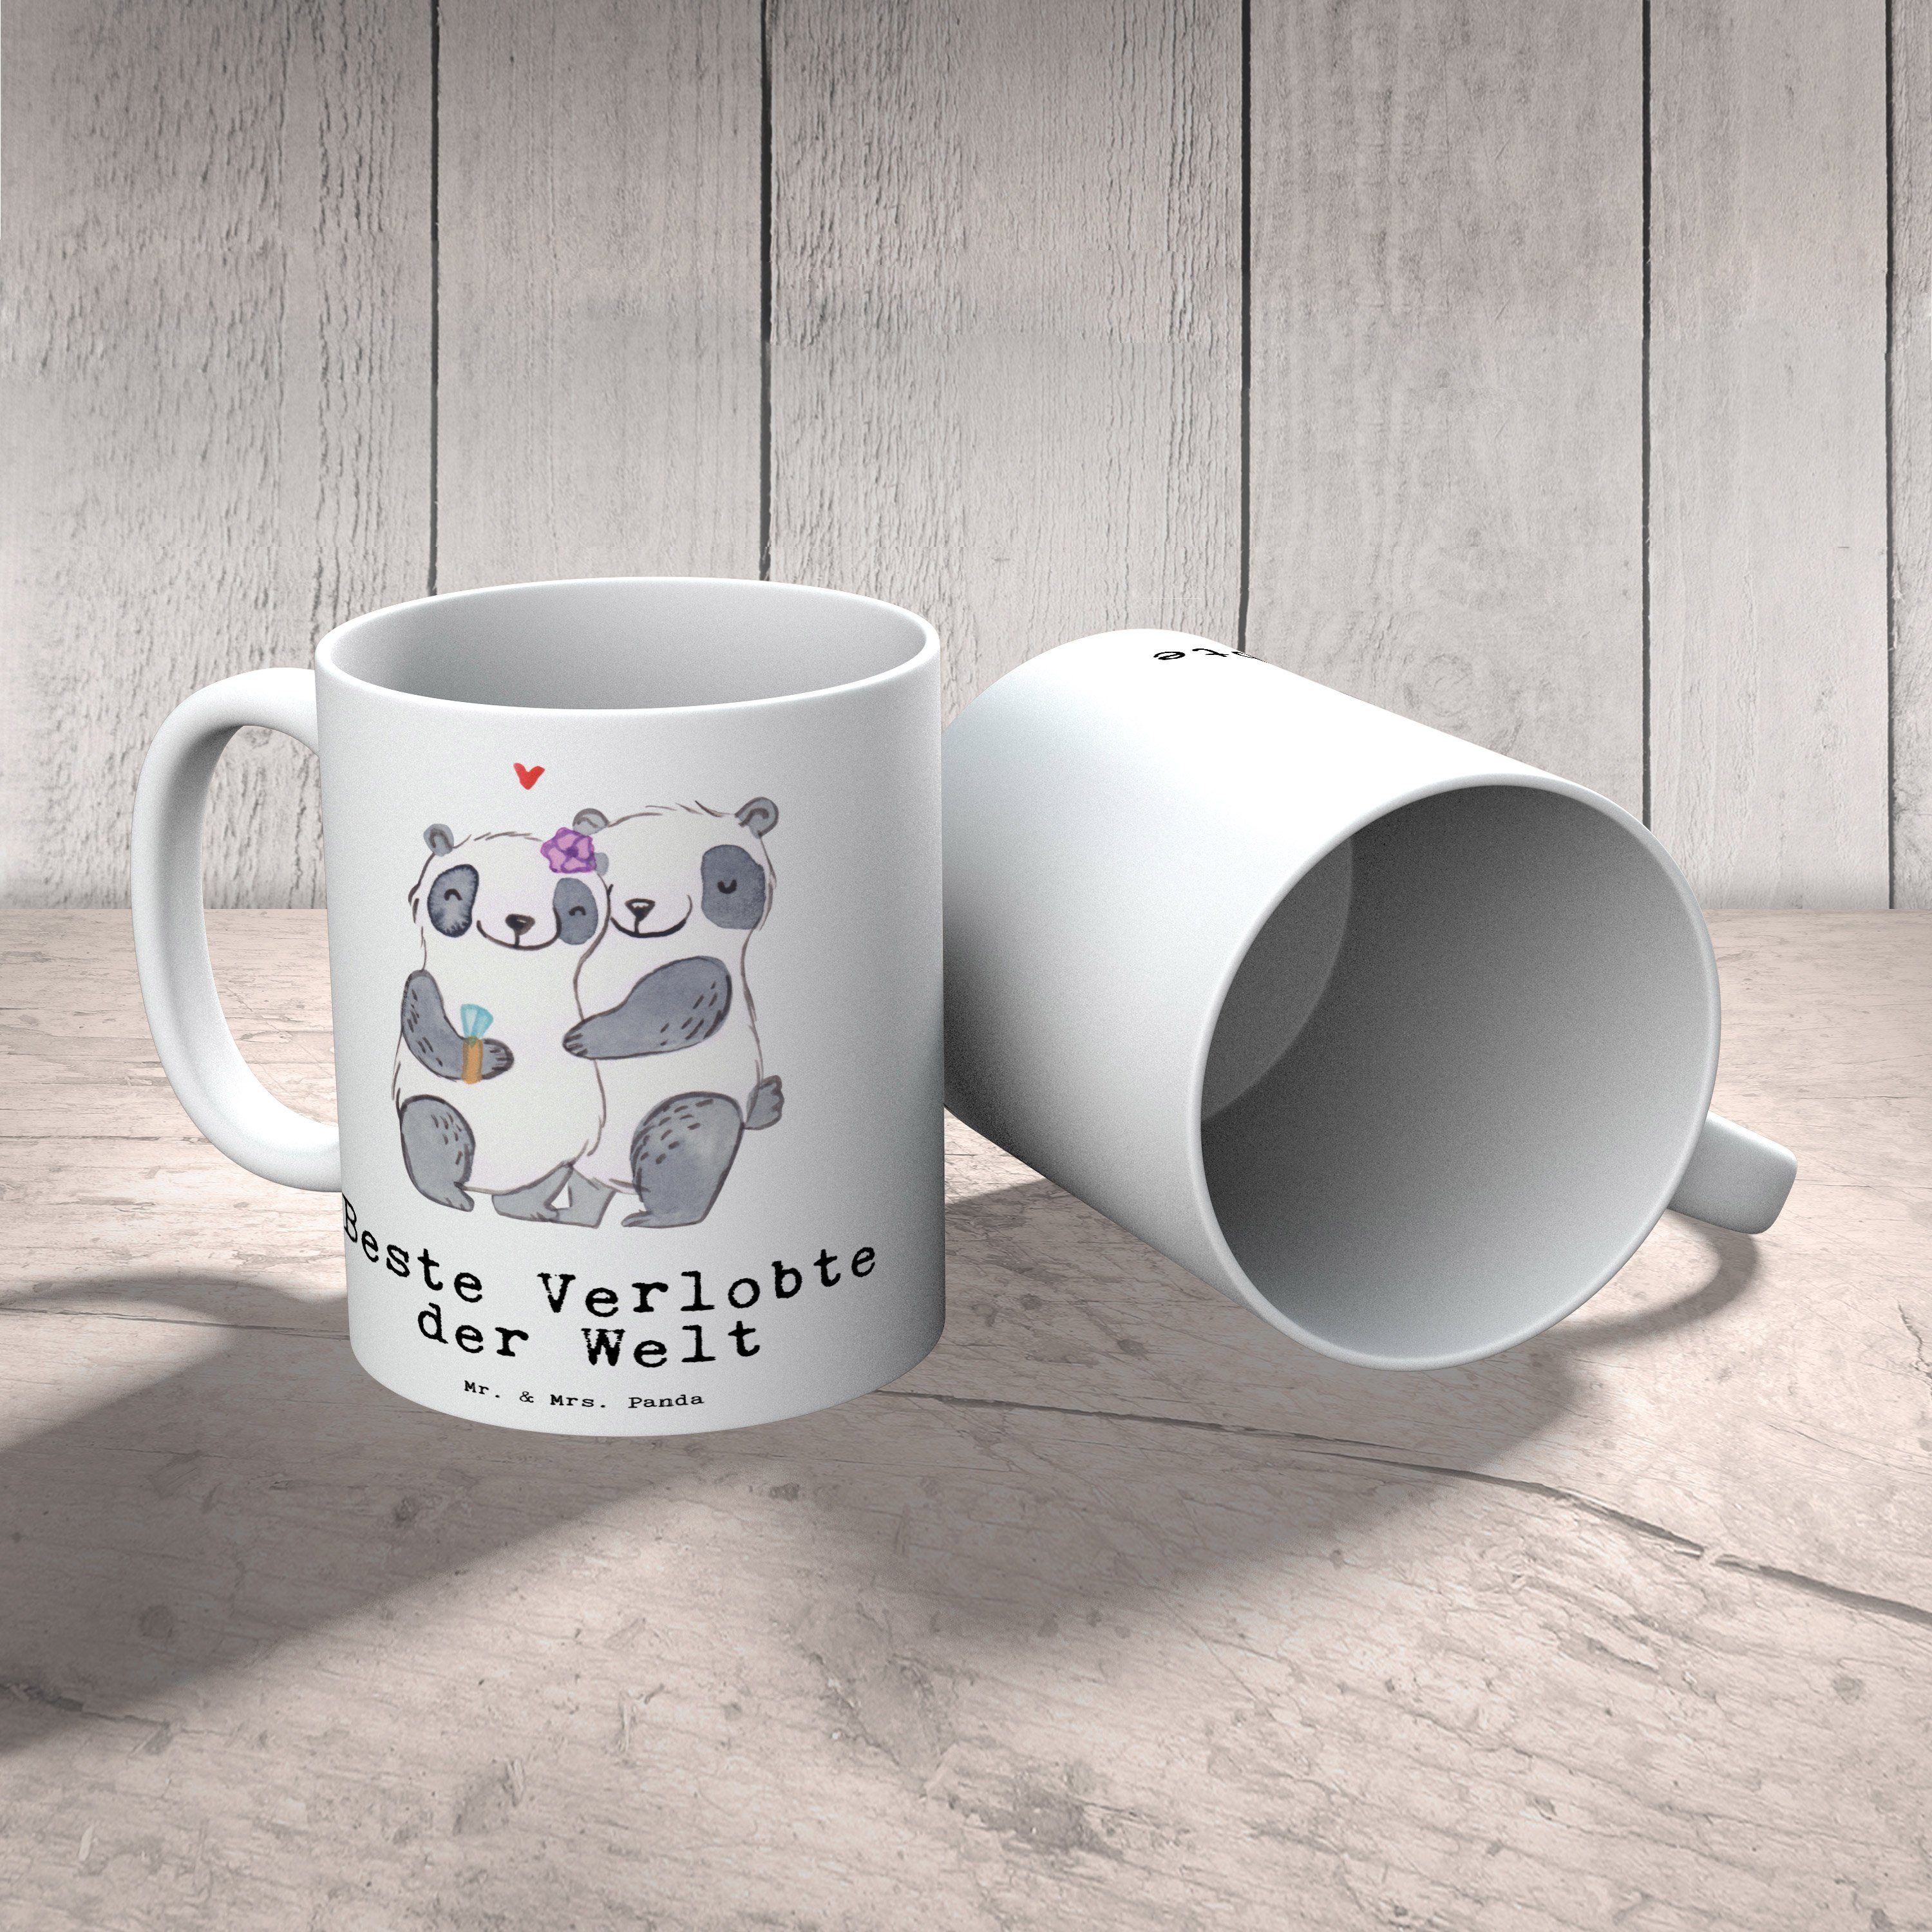 Mr. & Mrs. Panda Tasse Kaffeebecher, Hochzeit, Geschenktipp, Bedanken, Geburtstag, Beste Weiß Tee, Becher, Büro, Keramik - Panda der Verlobte Welt Freundin, Geschenk, - Geschenkidee